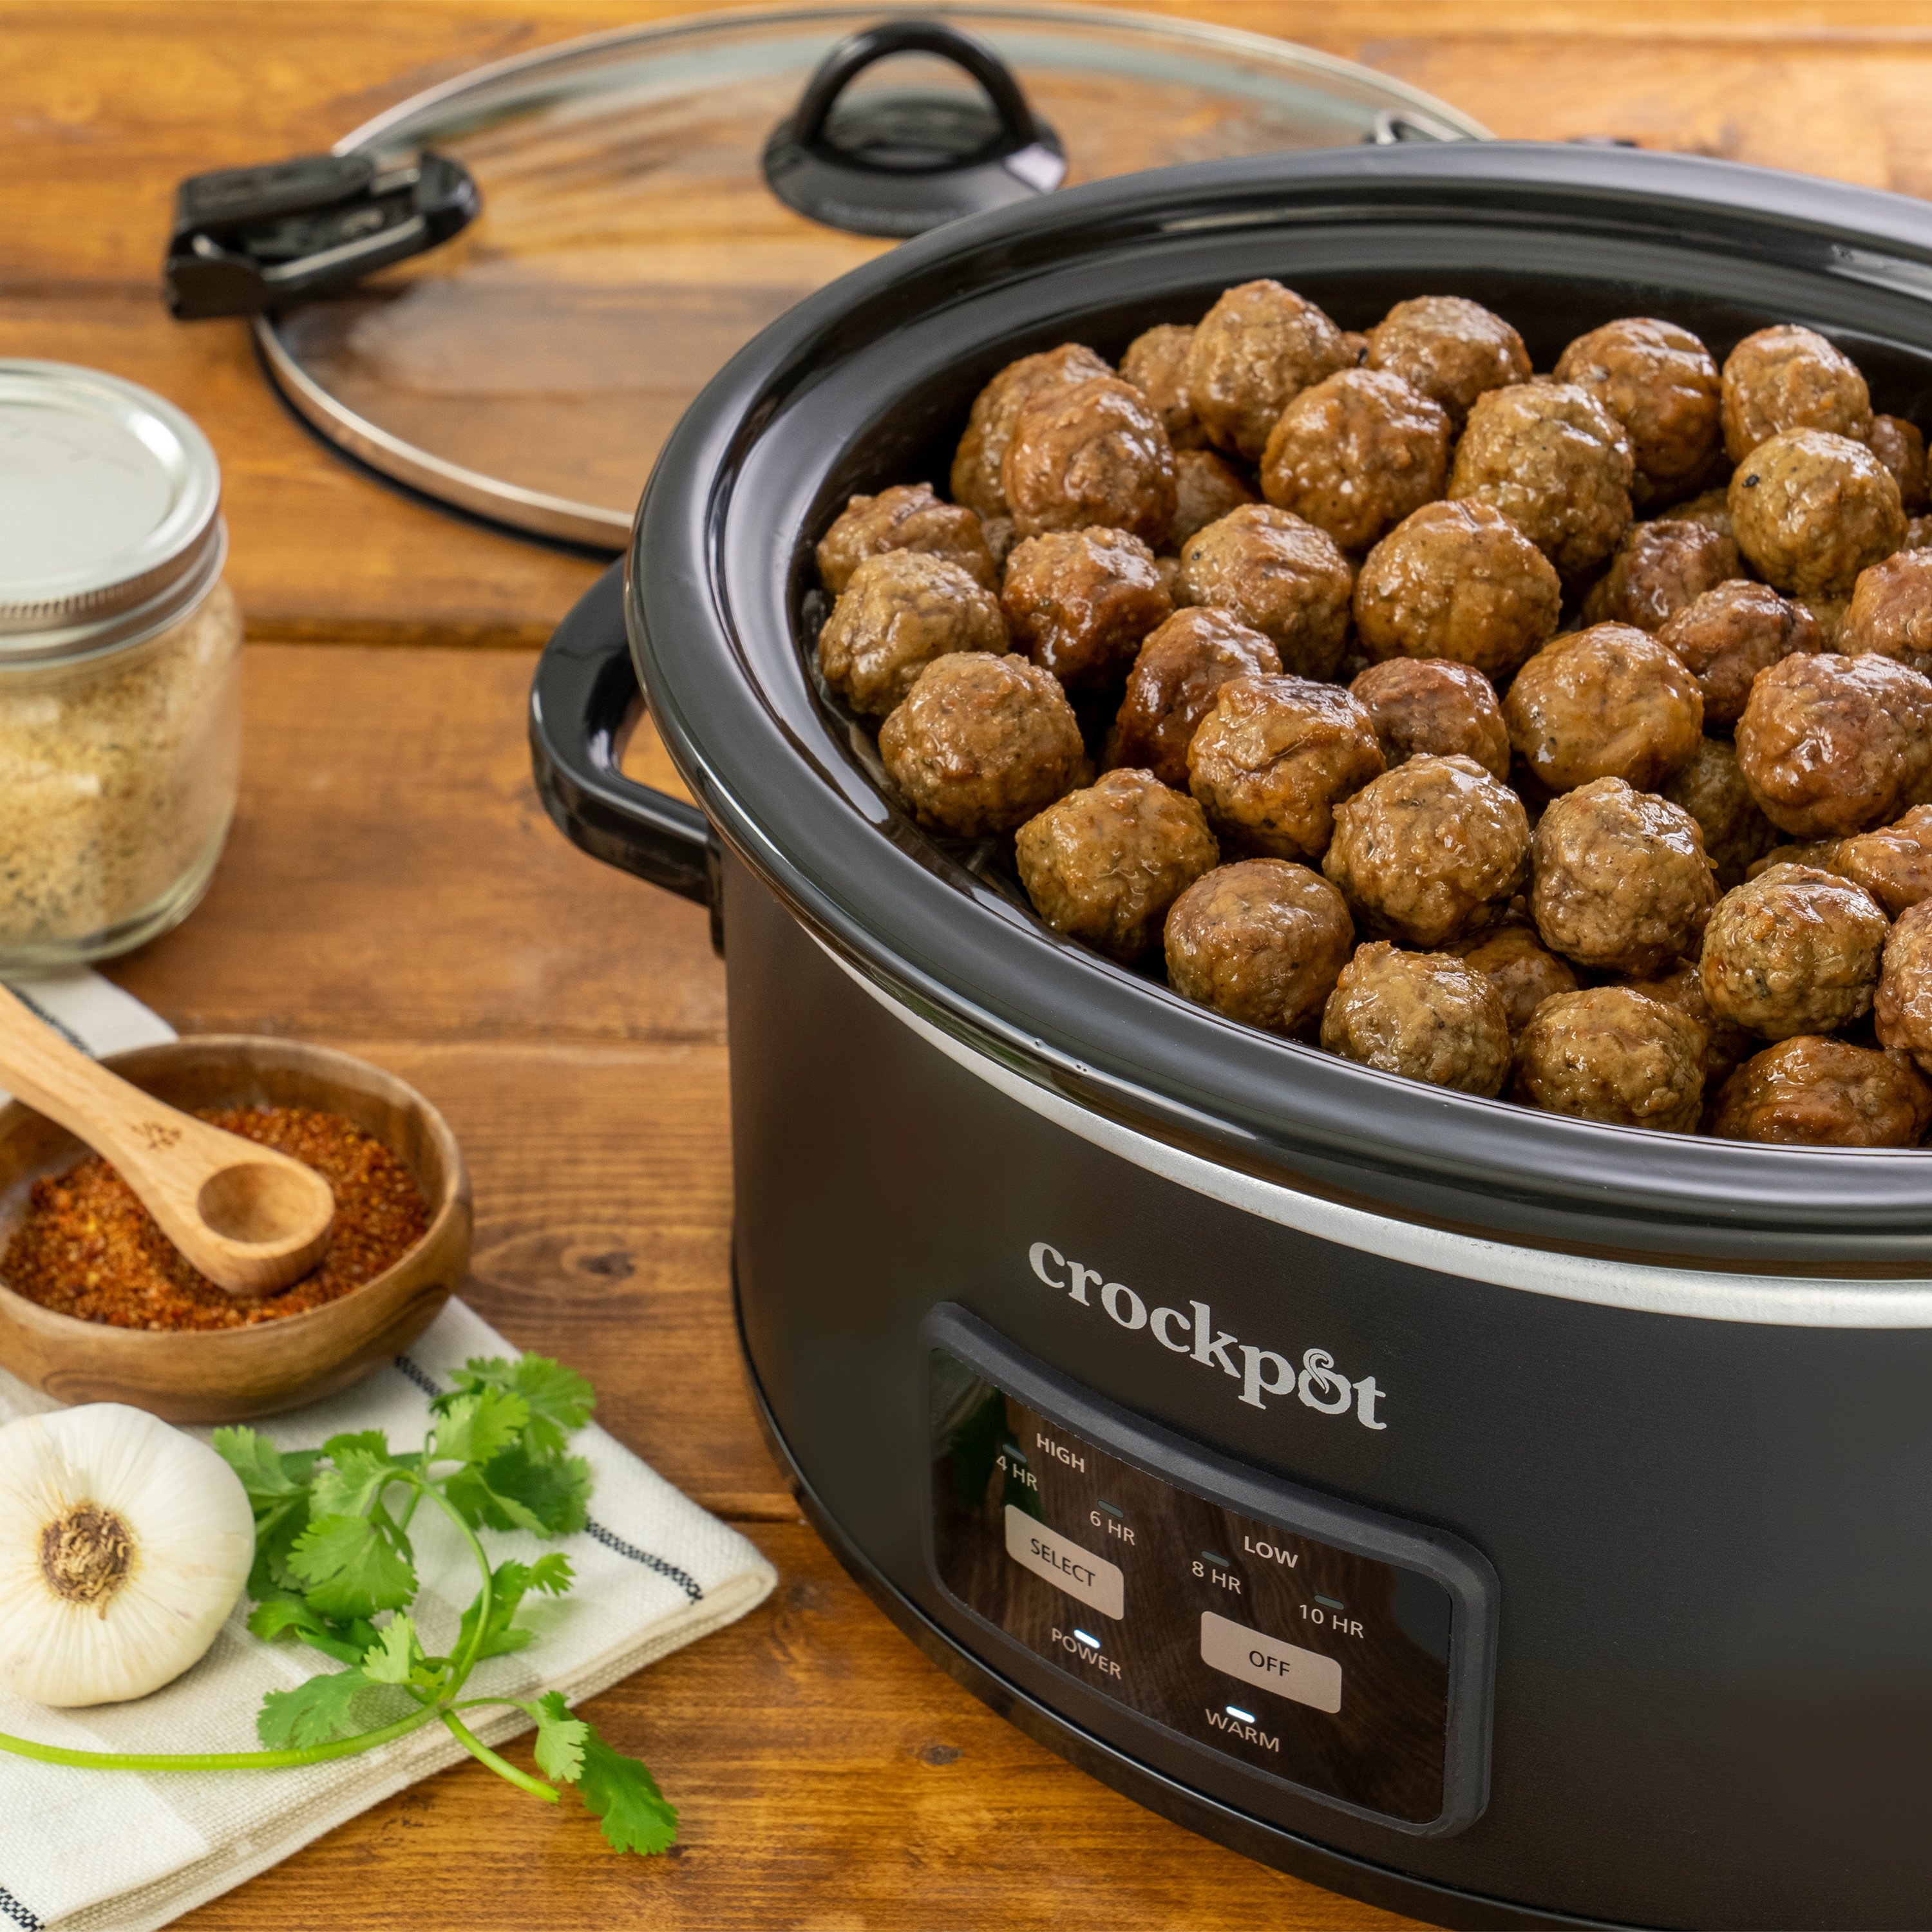 Crock-Pot SCCPCTS605-S Cook Travel Serve 6-Quart Programmable Slow Cooker